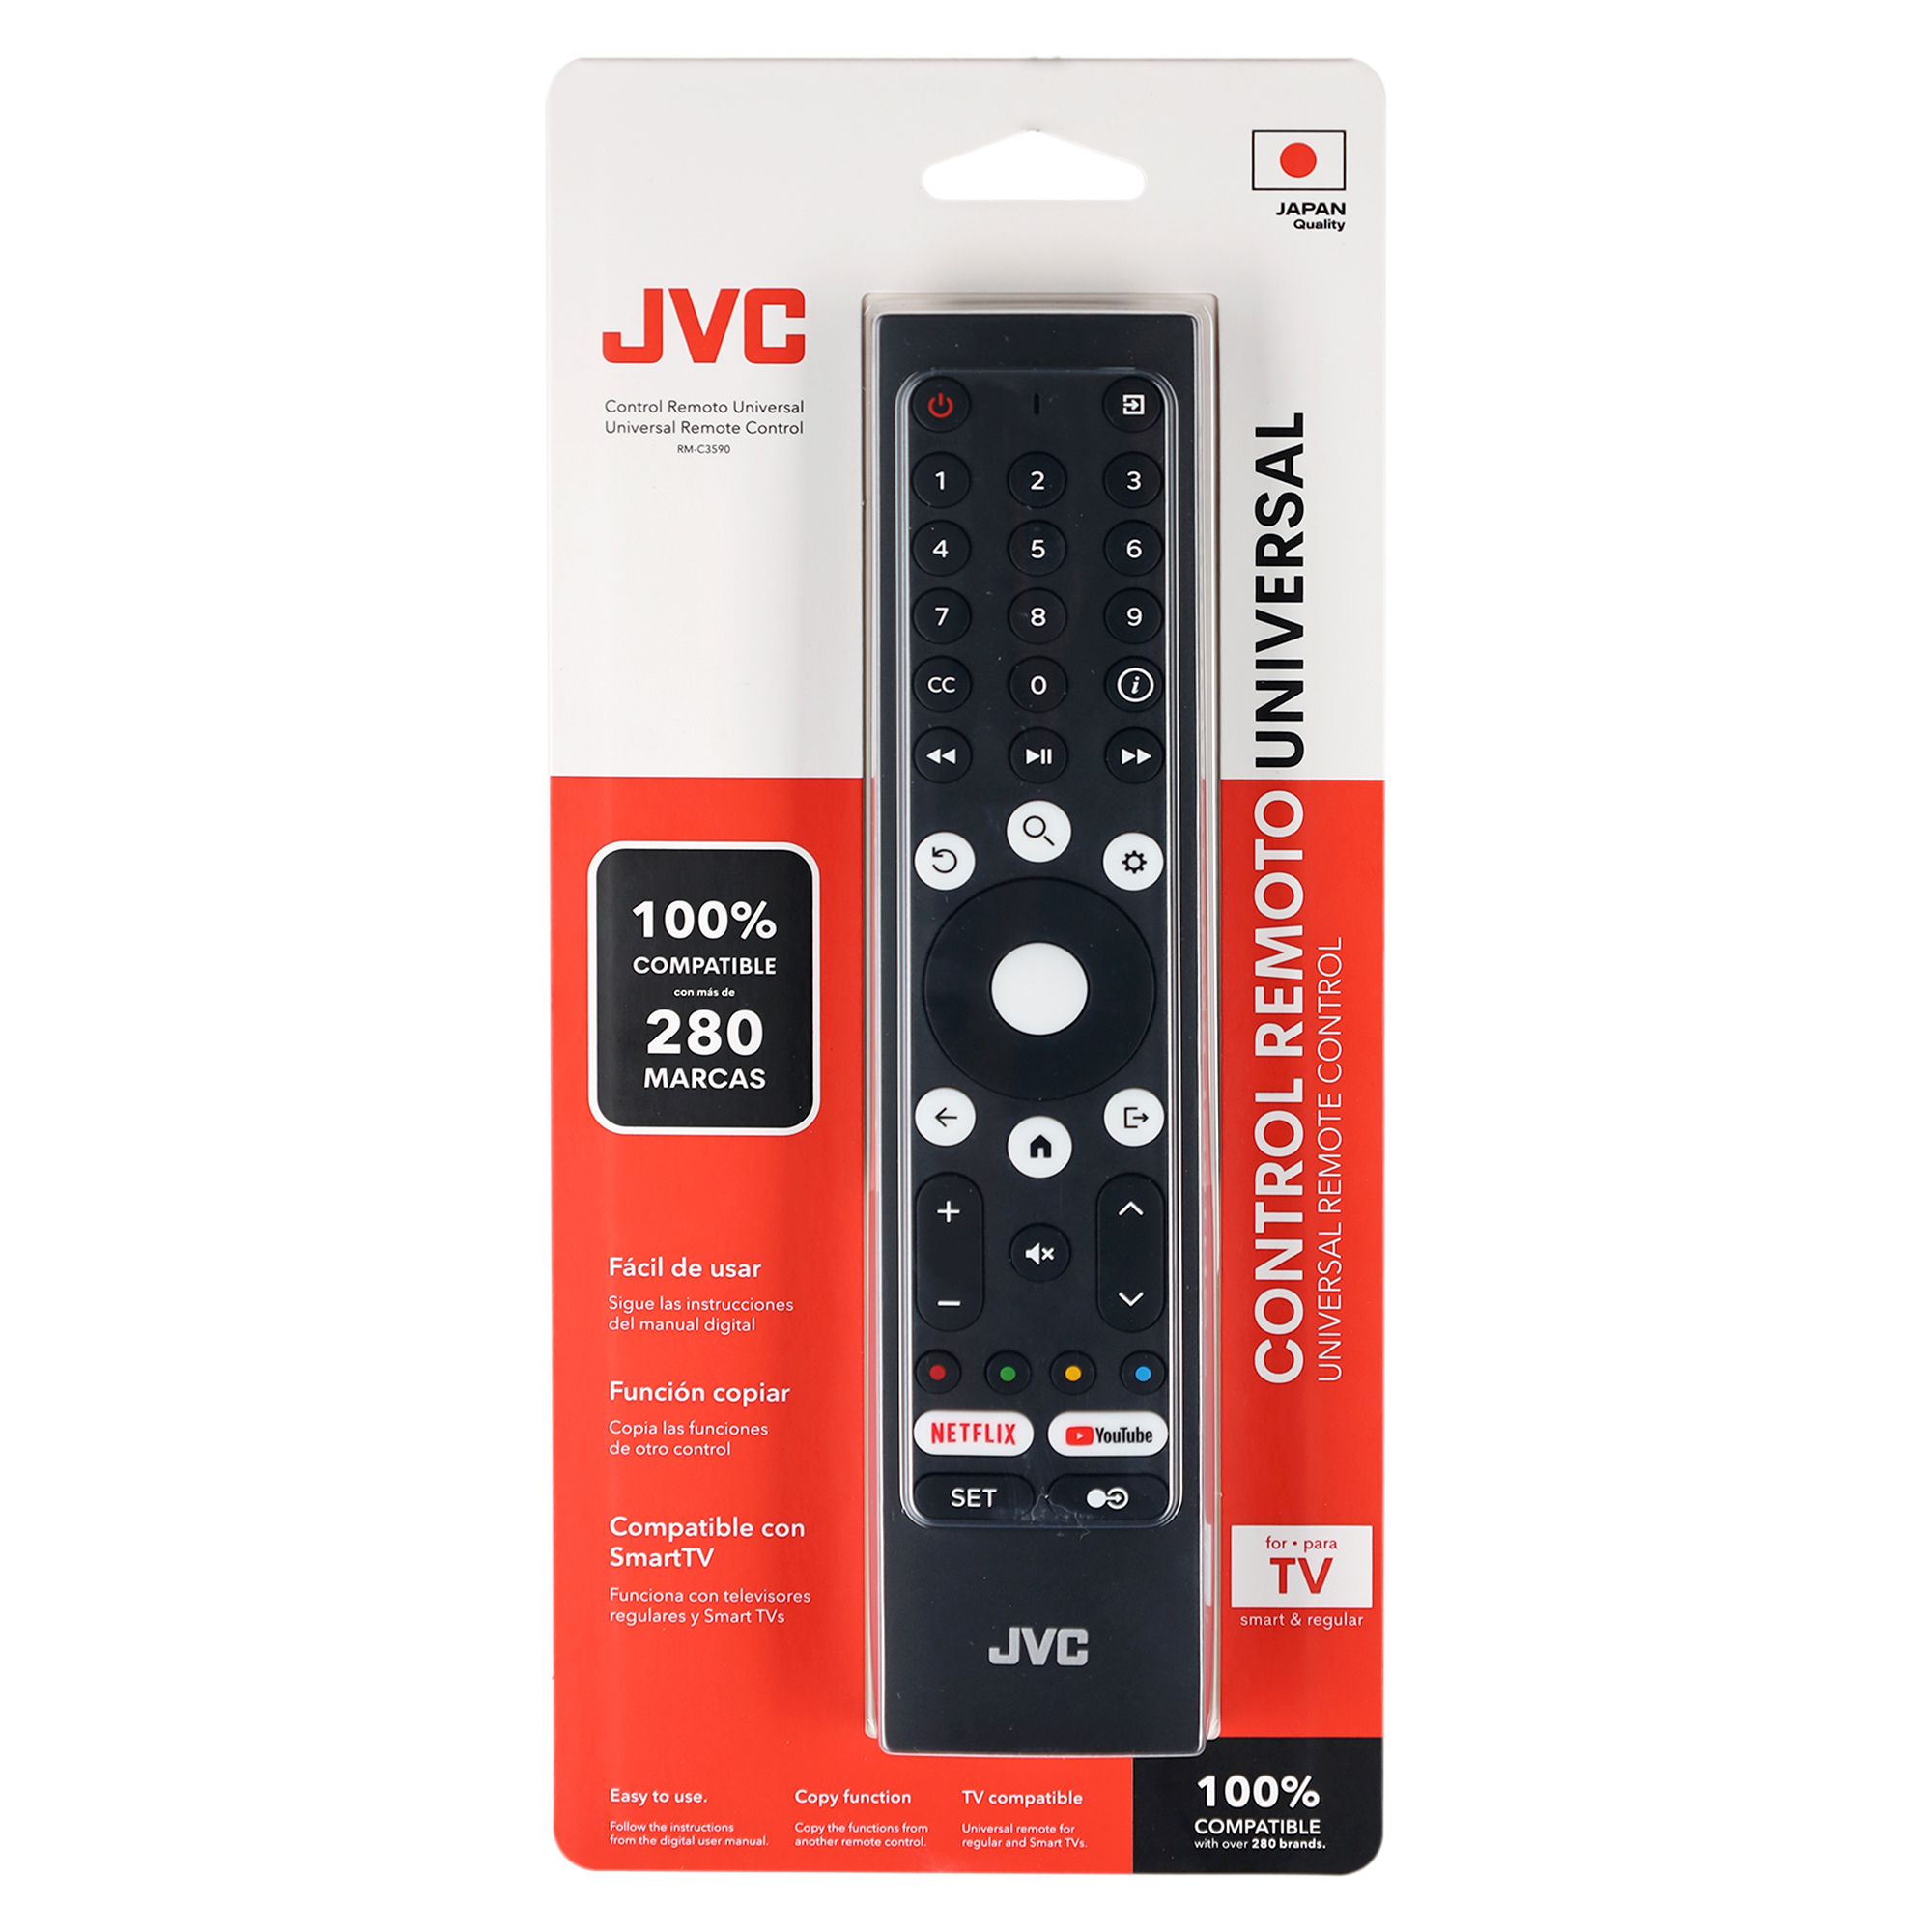 Control remoto Universal JVC - Multimax Store